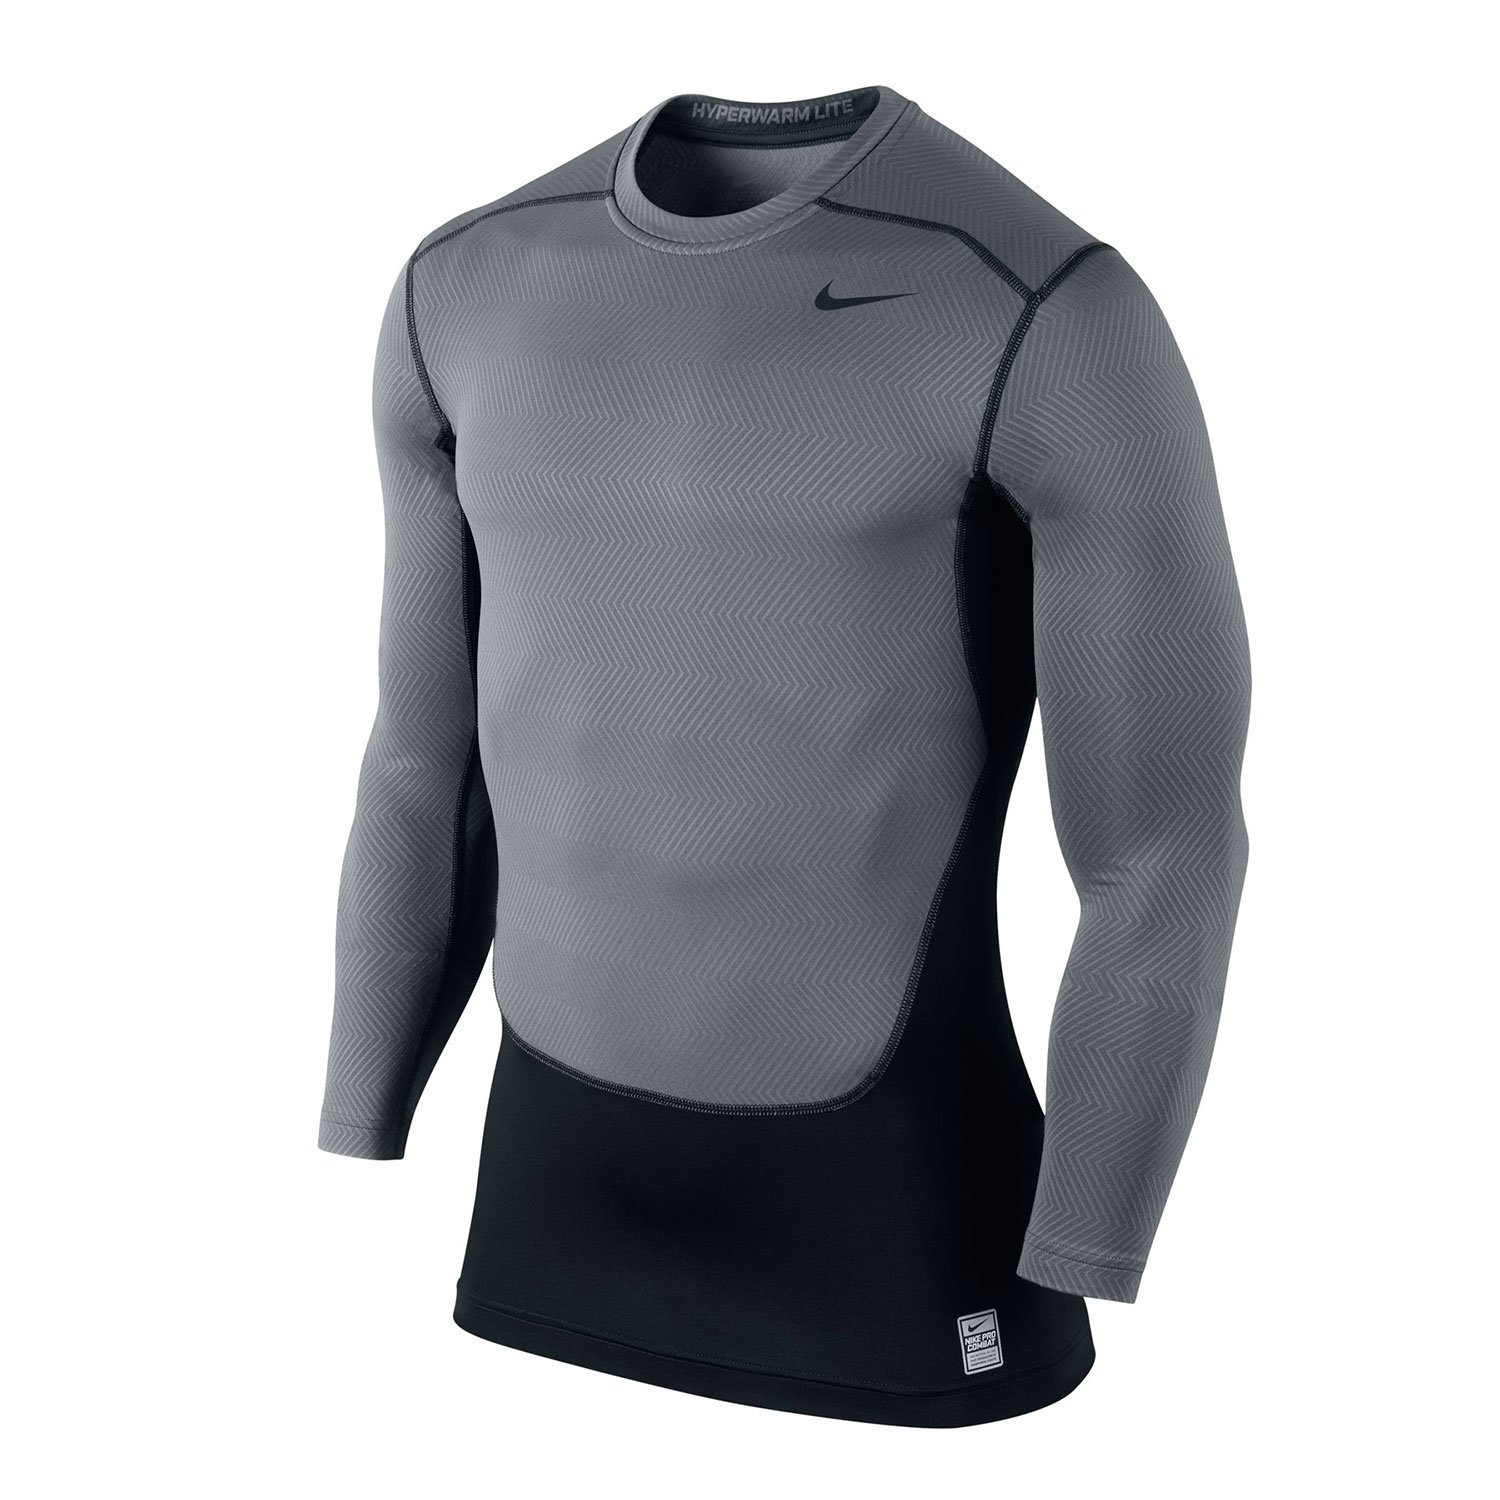 Nike Men's Hyperwarm Lite Compression Shirt